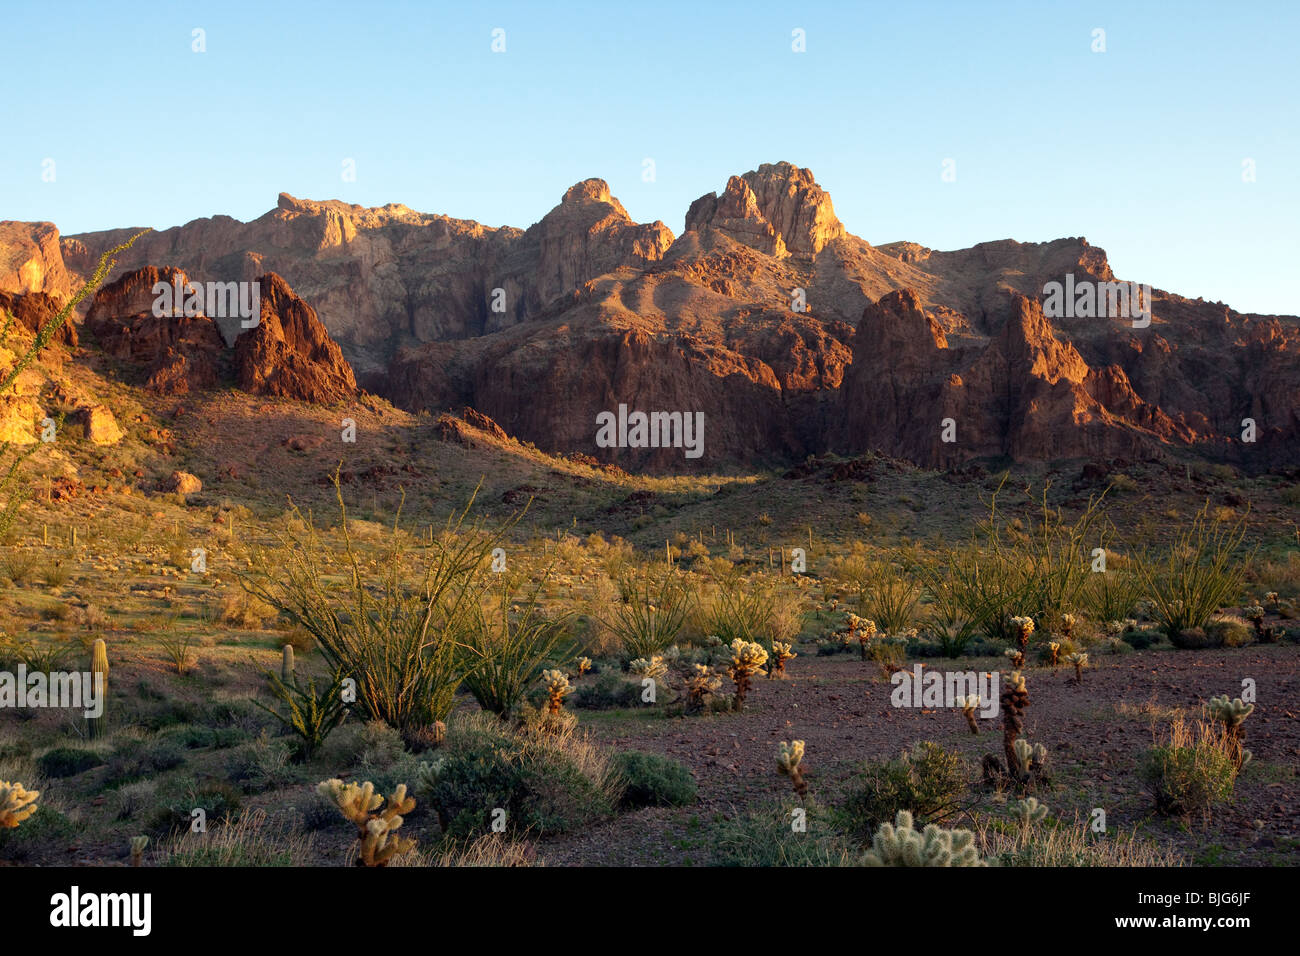 Rugged Beauty of the KOFA Mountains, KOFA Wildlife Refuge, Arizona Stock Photo